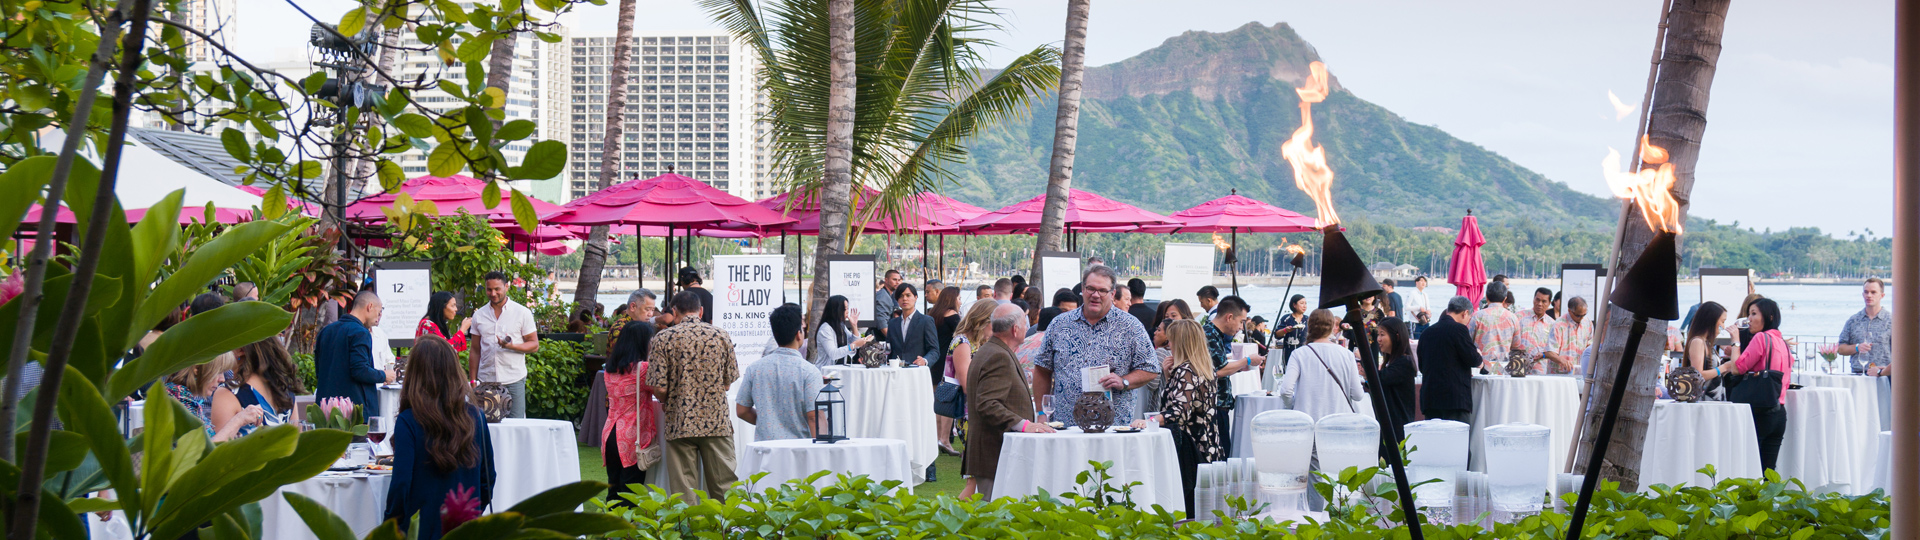 Alumni event at the Royal Hawaiian, Diamond Head in the background.